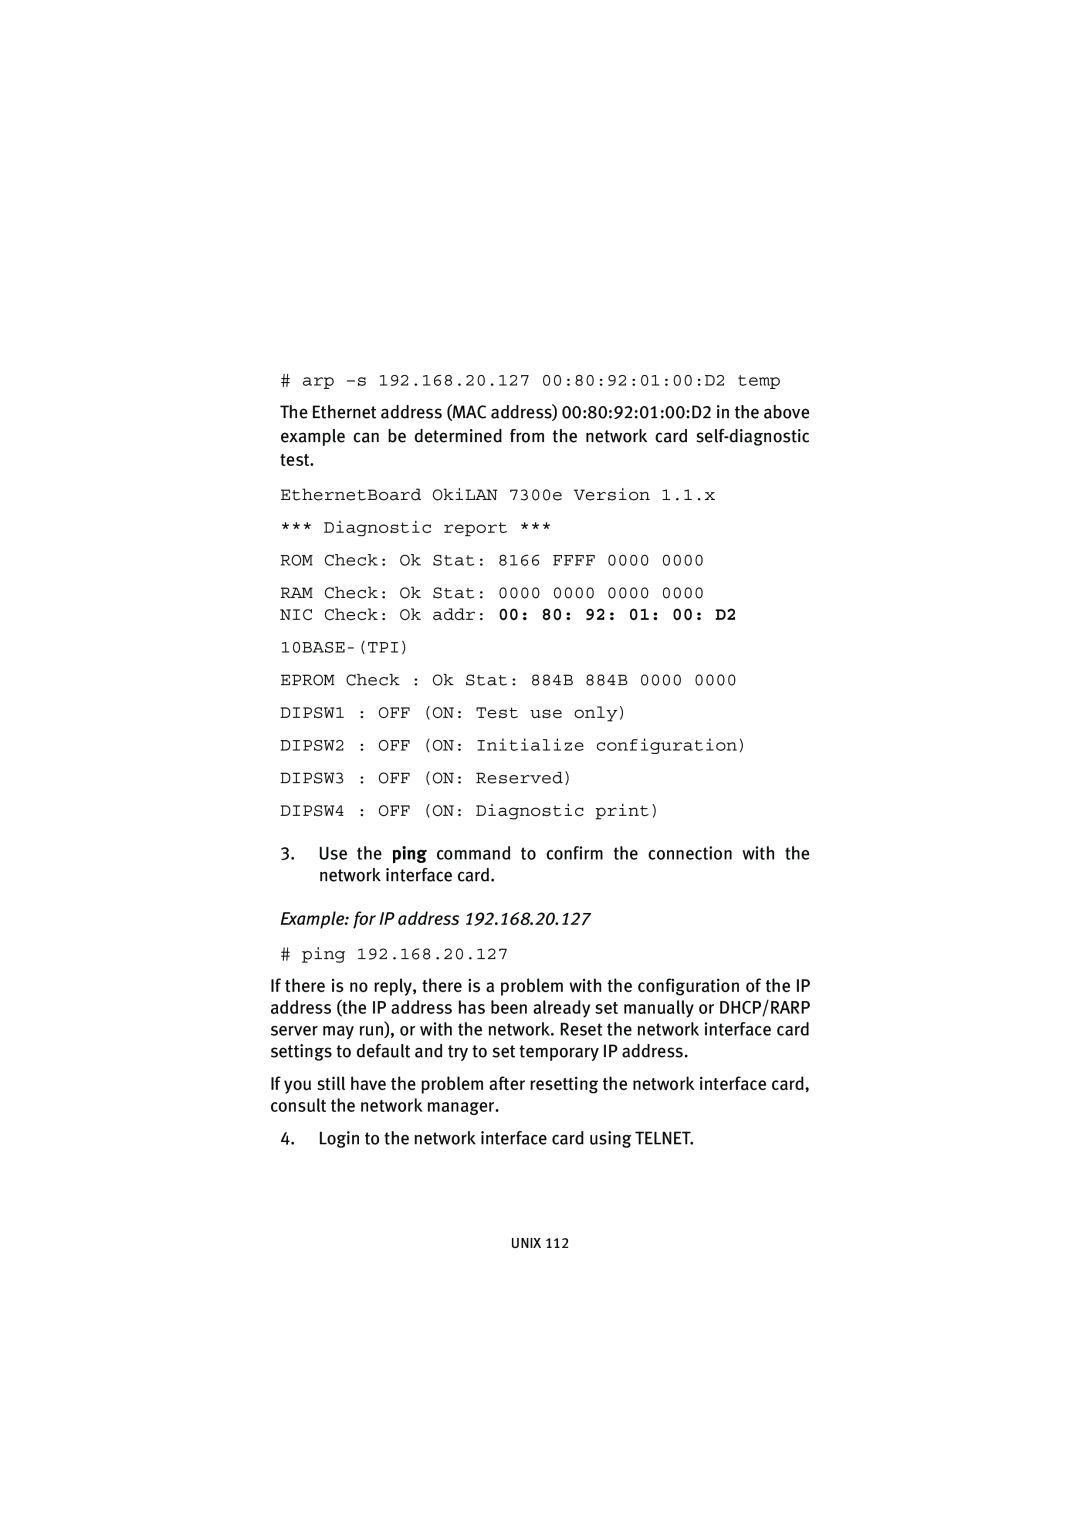 Oki 7300e manual # arp -s192.168.20.127 00 80 92 01 00 D2 temp, Example for IP address 